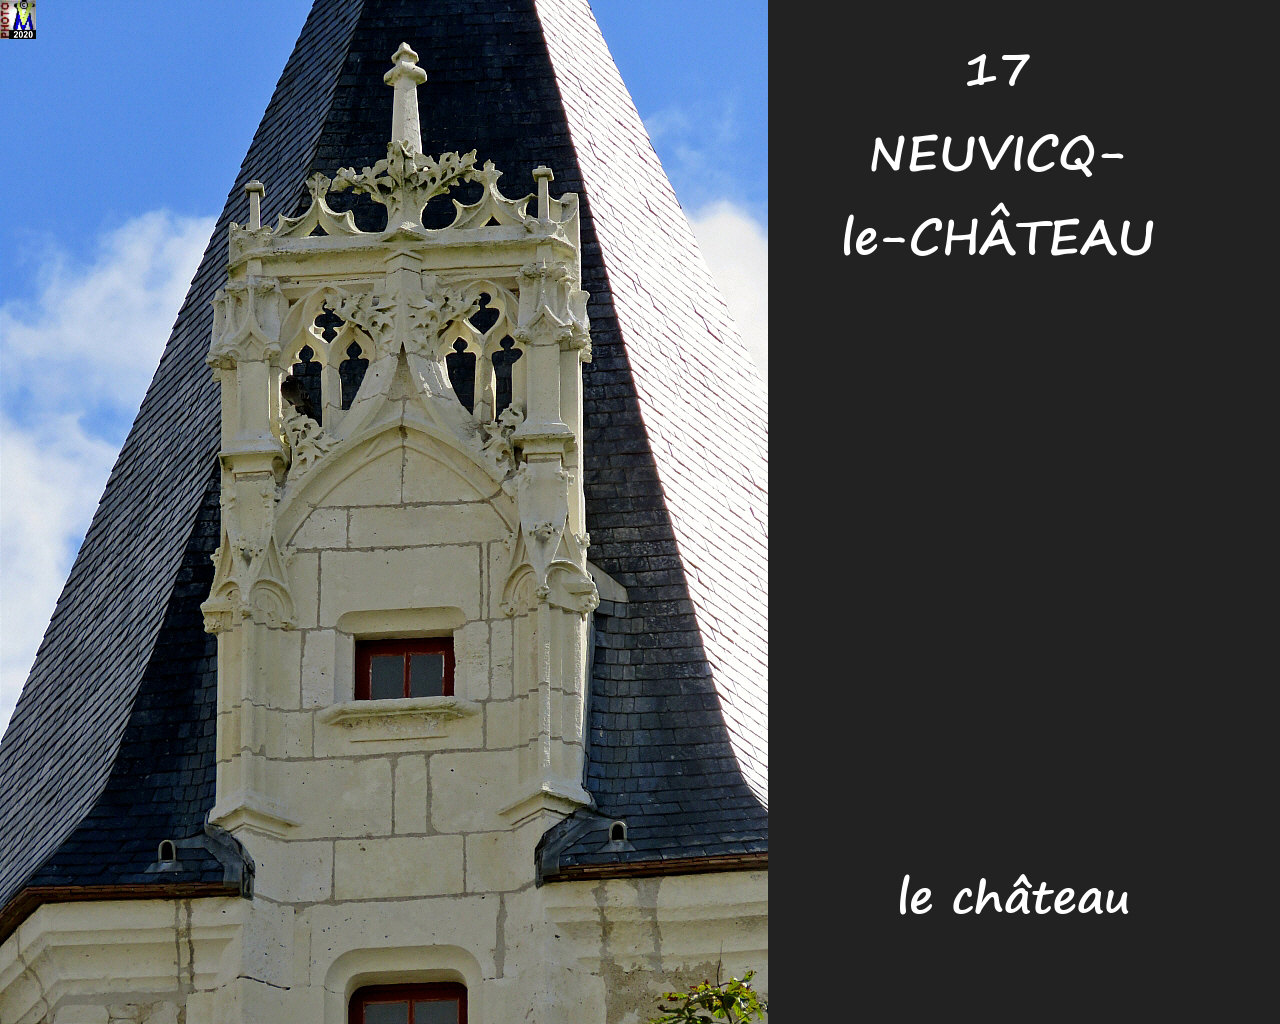 17NEUVICQ-CHATEAU_chateau_1030.jpg